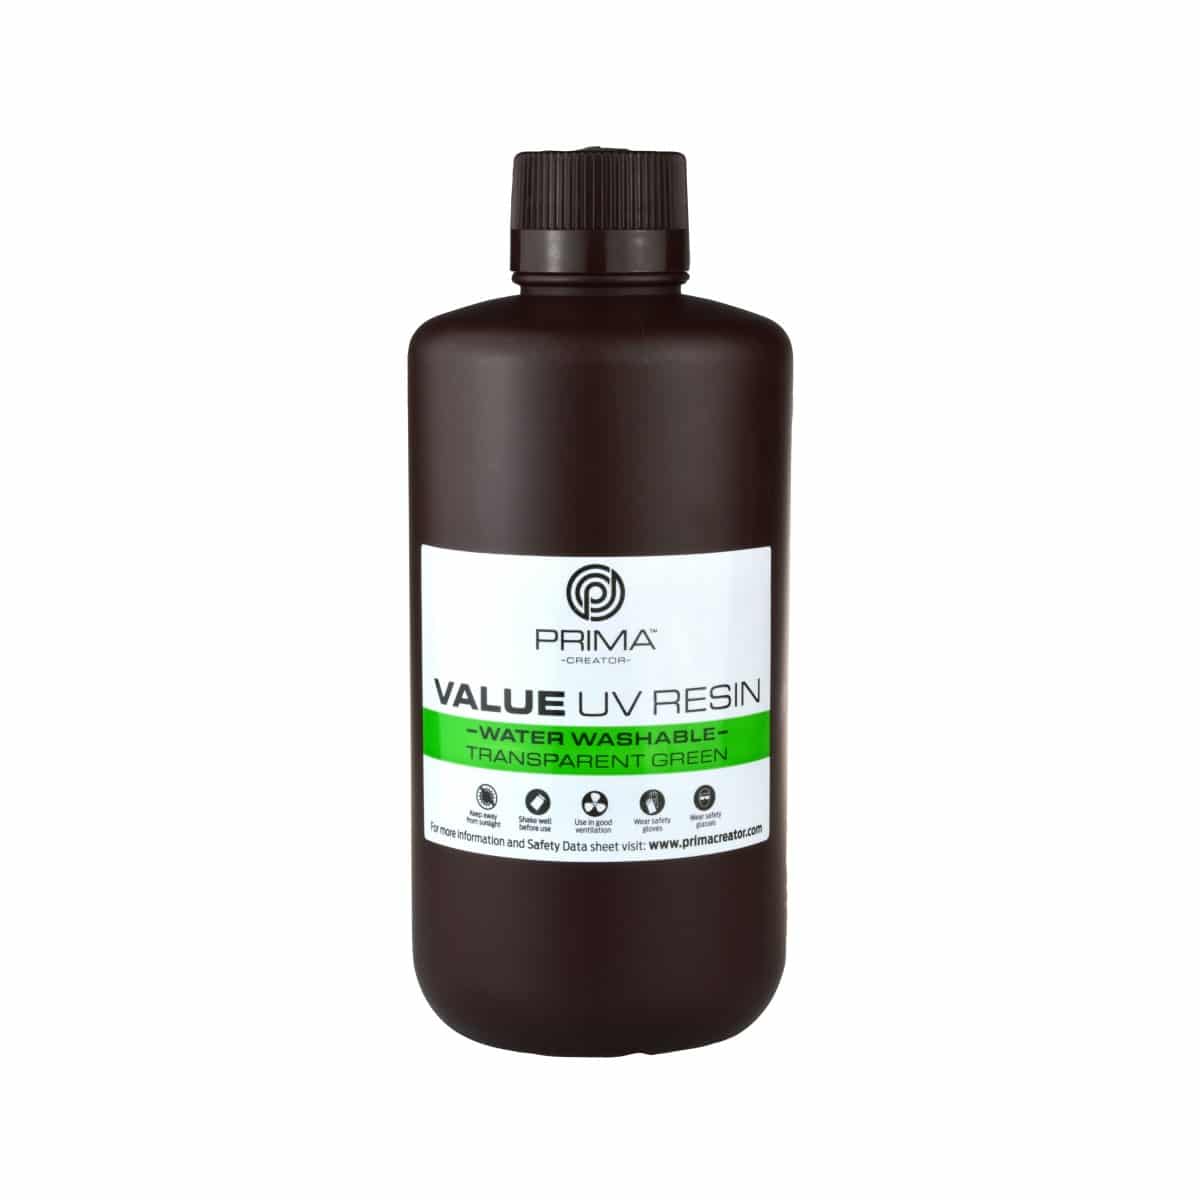 PrimaCreator Value Water Washable UV Resin – 1000 ml – Transparent Green Resin